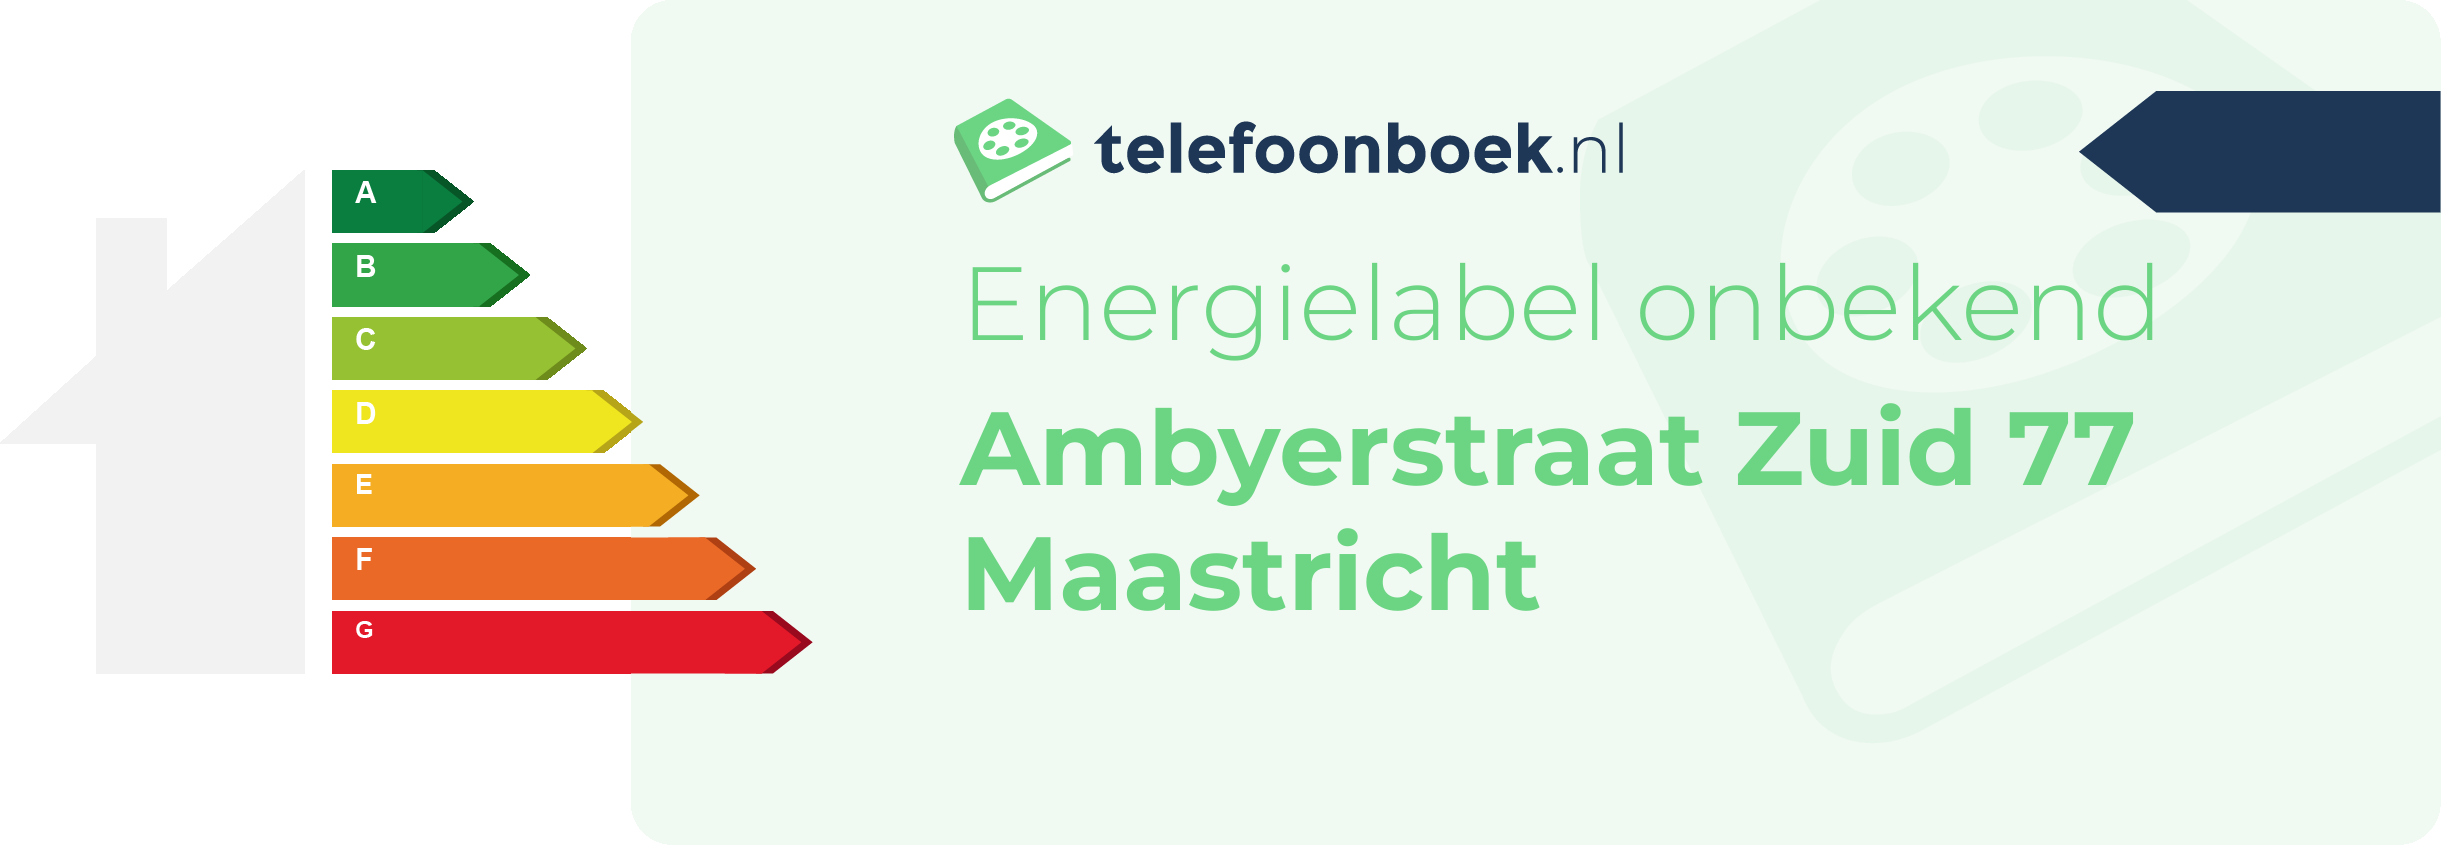 Energielabel Ambyerstraat Zuid 77 Maastricht